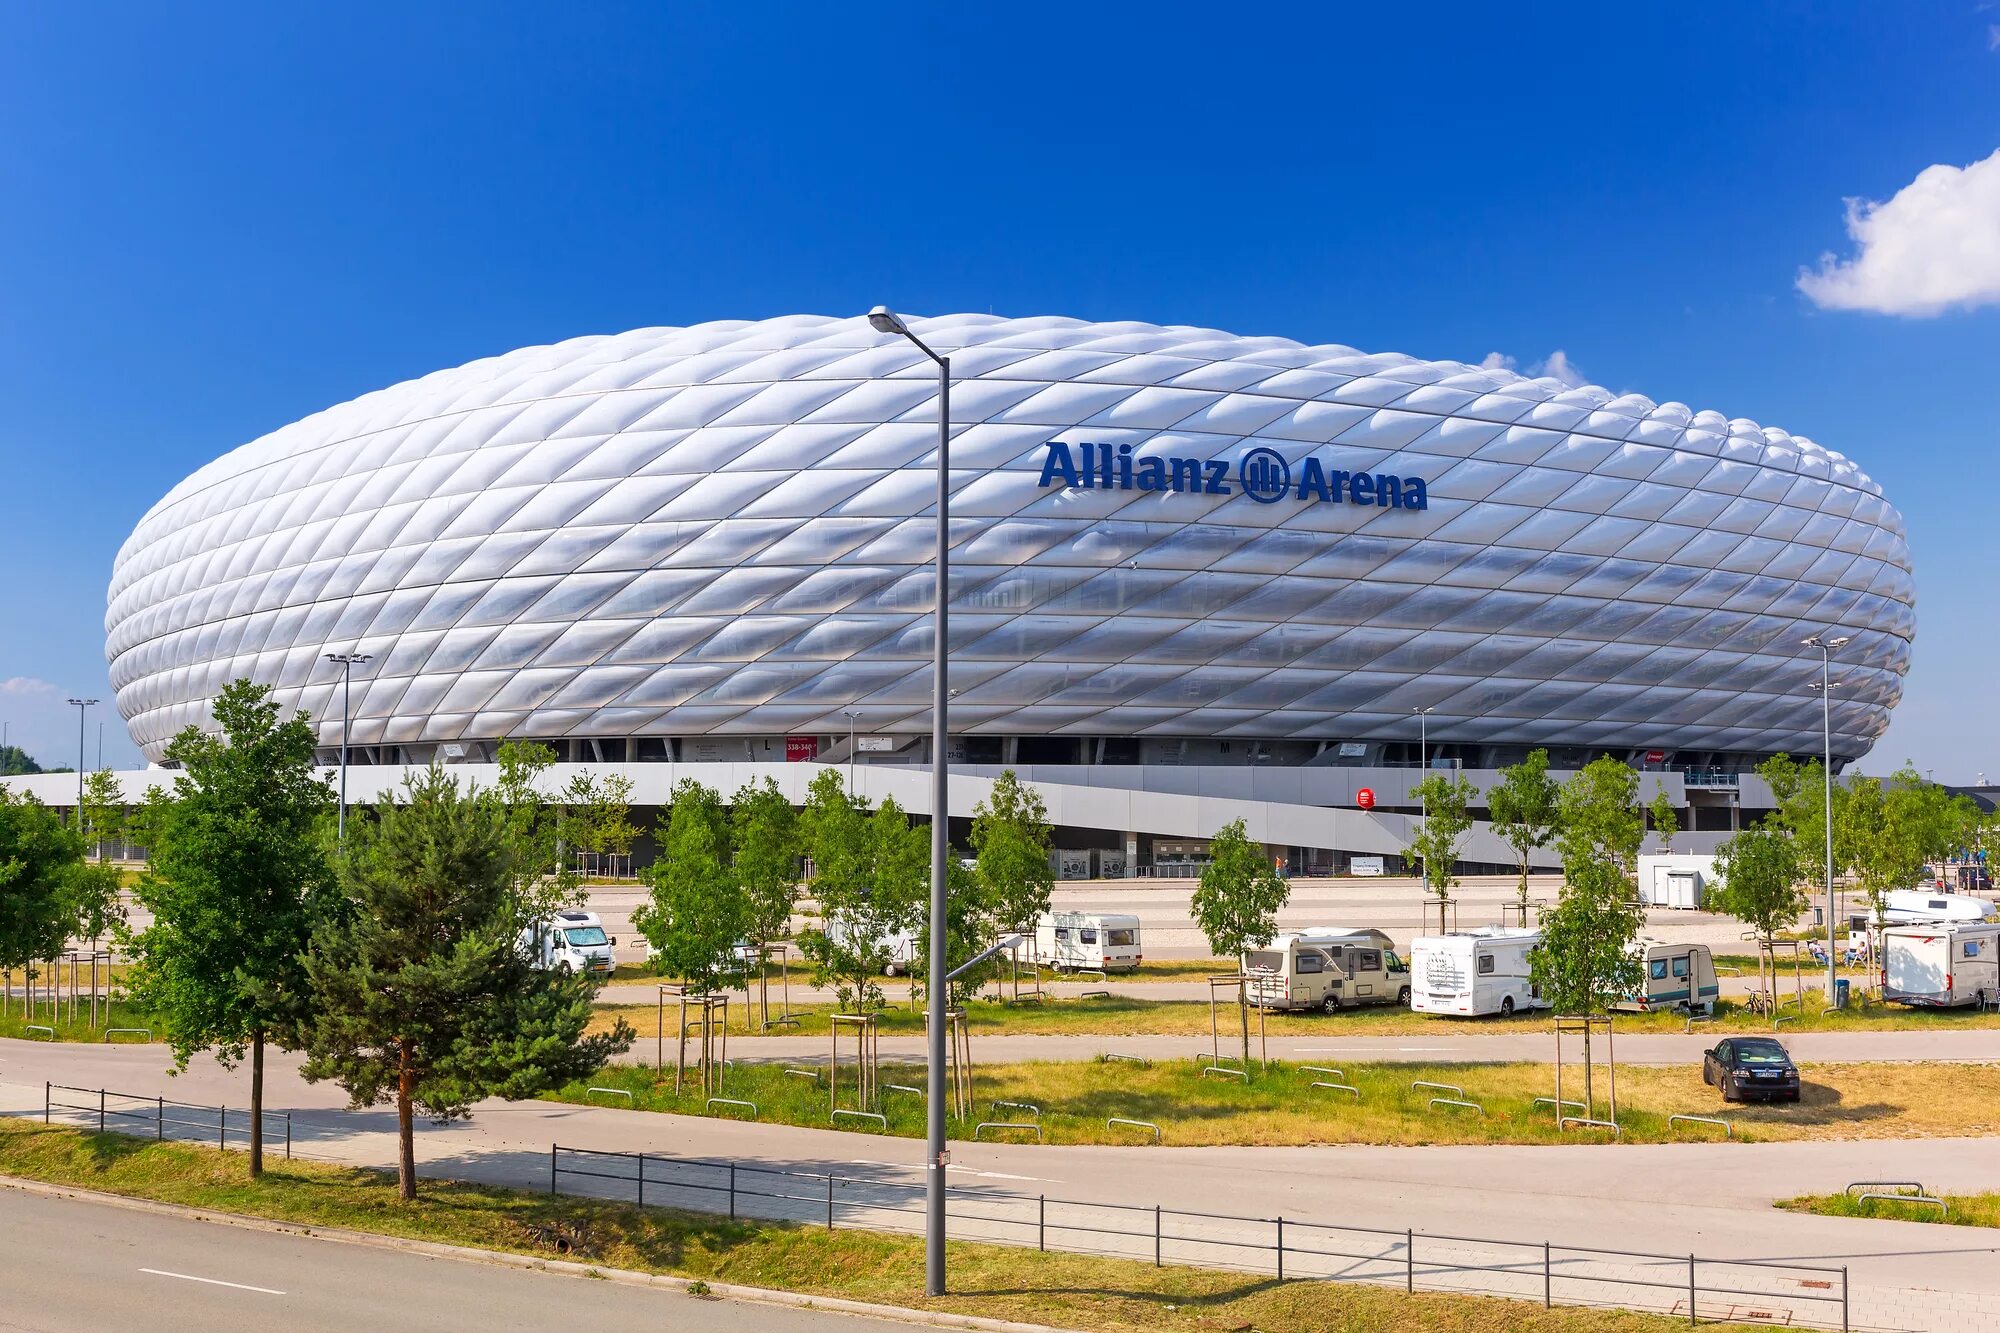 Стадион Альянц Арена. Бавария Арена Мюнхен. Мюнхен Арена стадион. Аллианц Арена в Мюнхене. Arenas где находится